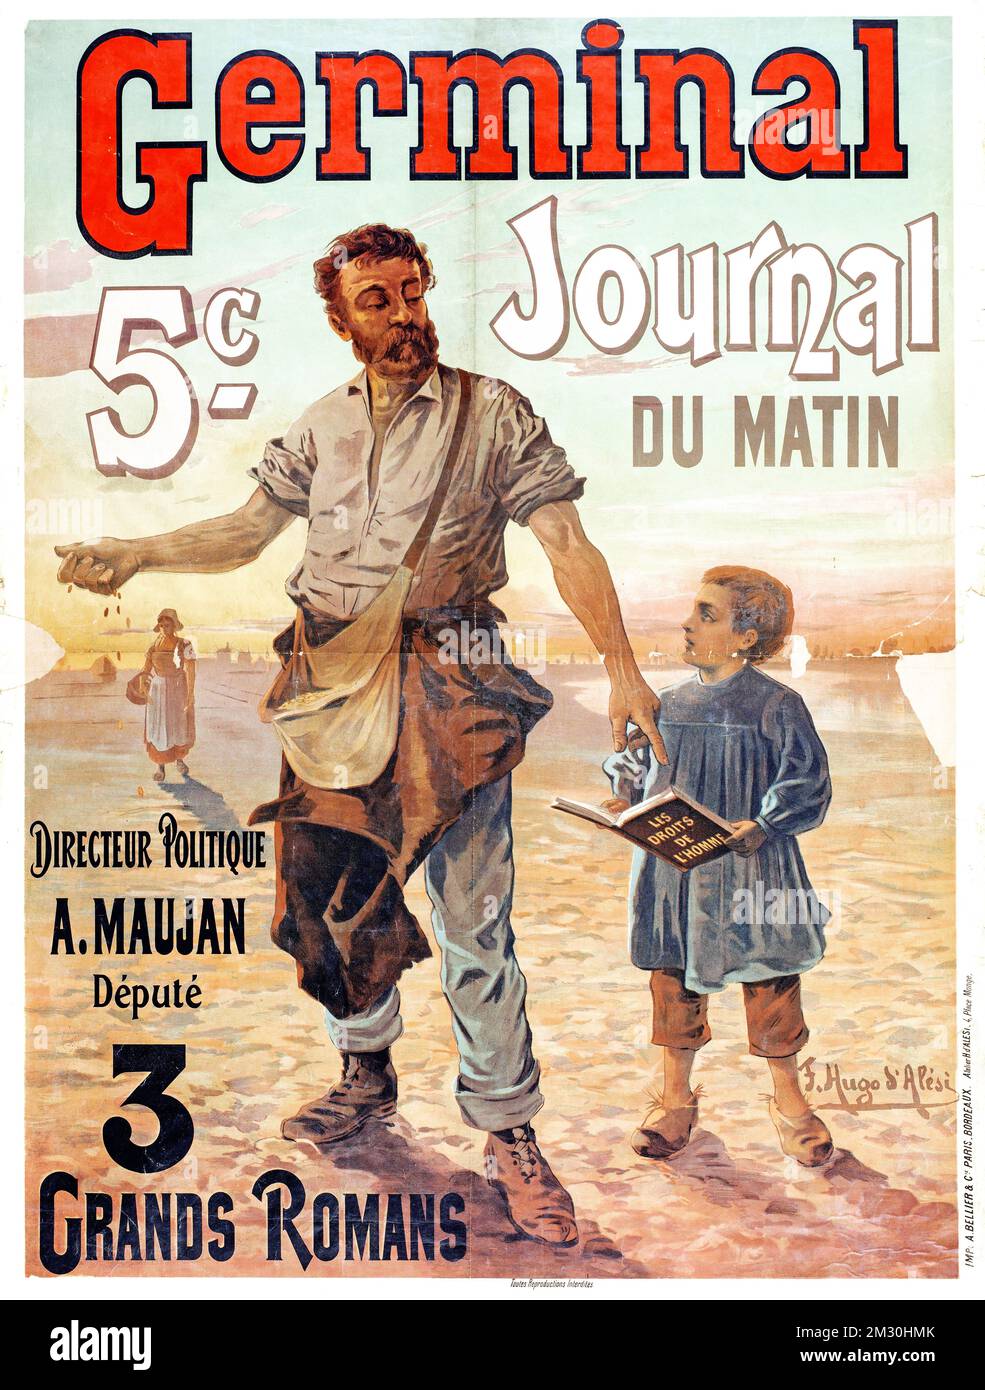 Vintage advertising poster - Germinal Journal, Du Matin, 5 c, Grands Romans -  F. Hugo d'Alesi artwork, c 1893 Stock Photo